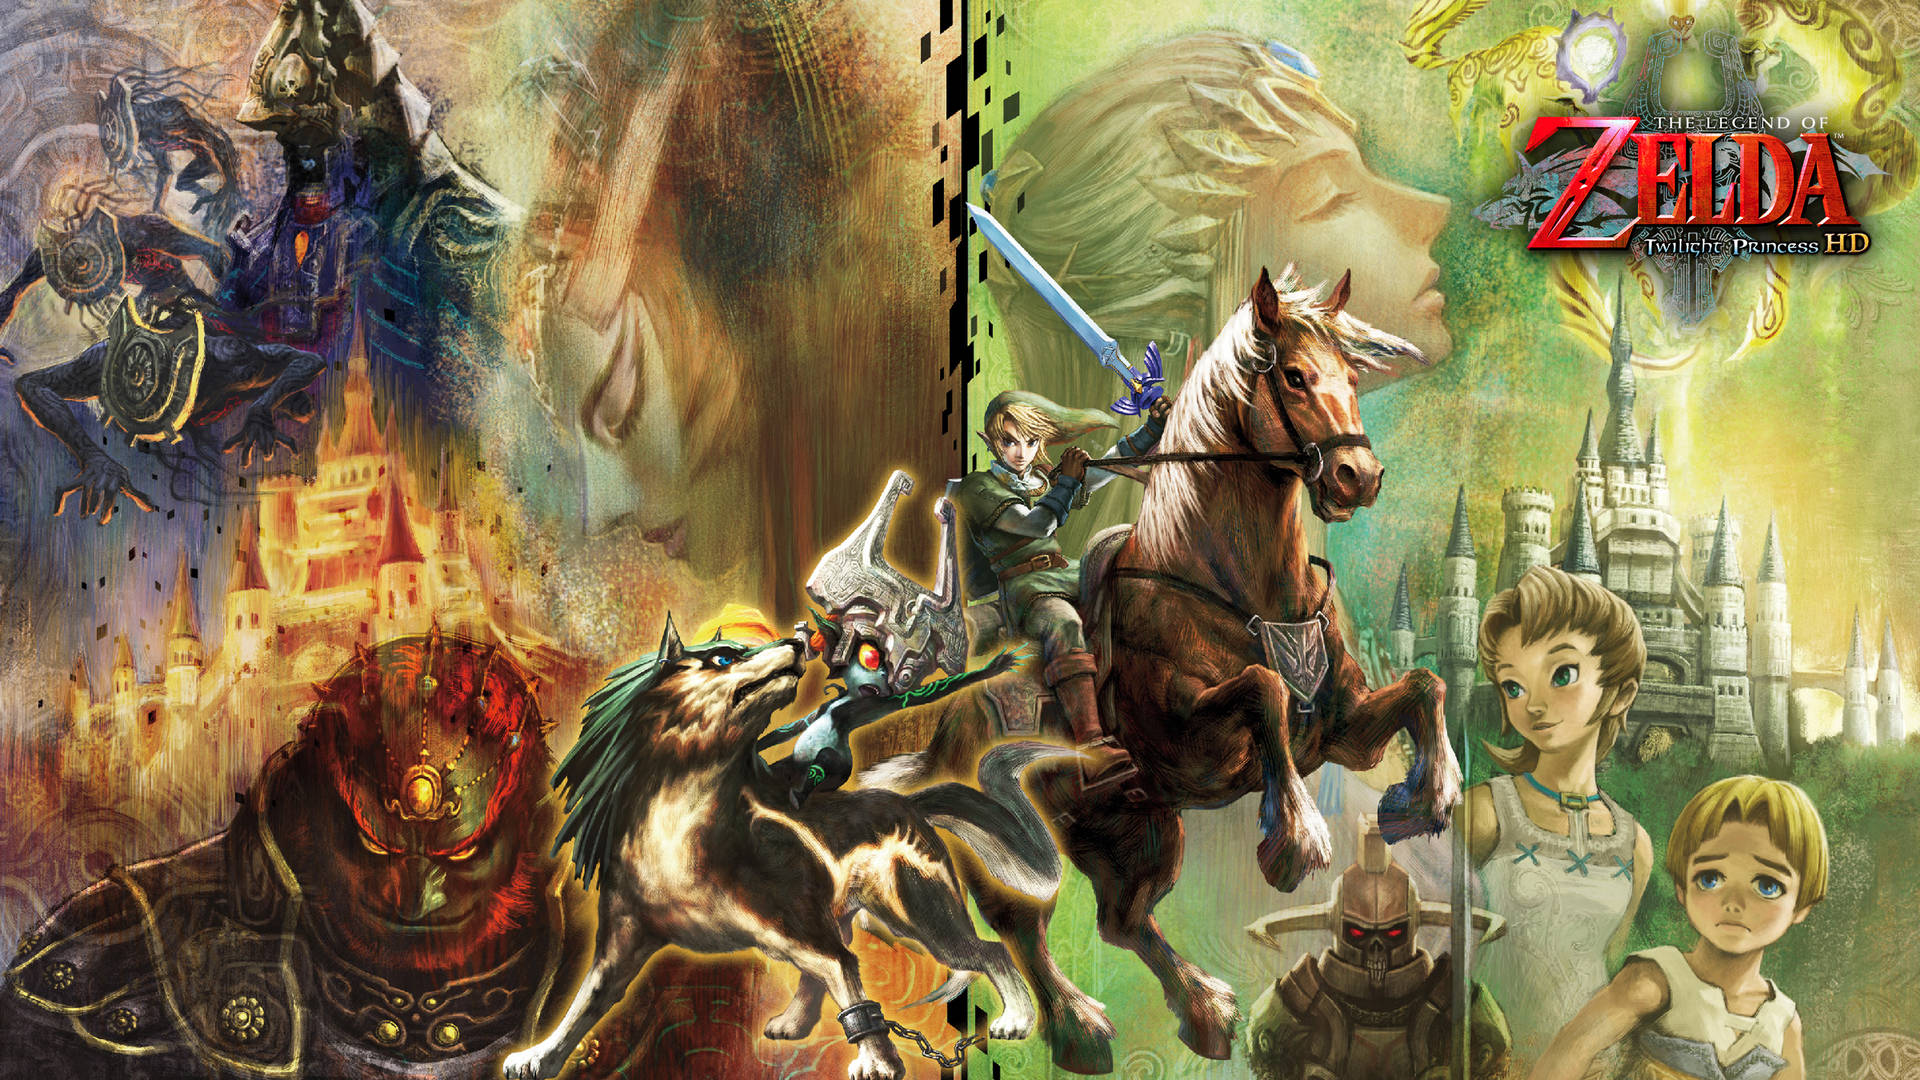 Explore the world of Hyrule in The Legend of Zelda: Twilight Princess. Wallpaper